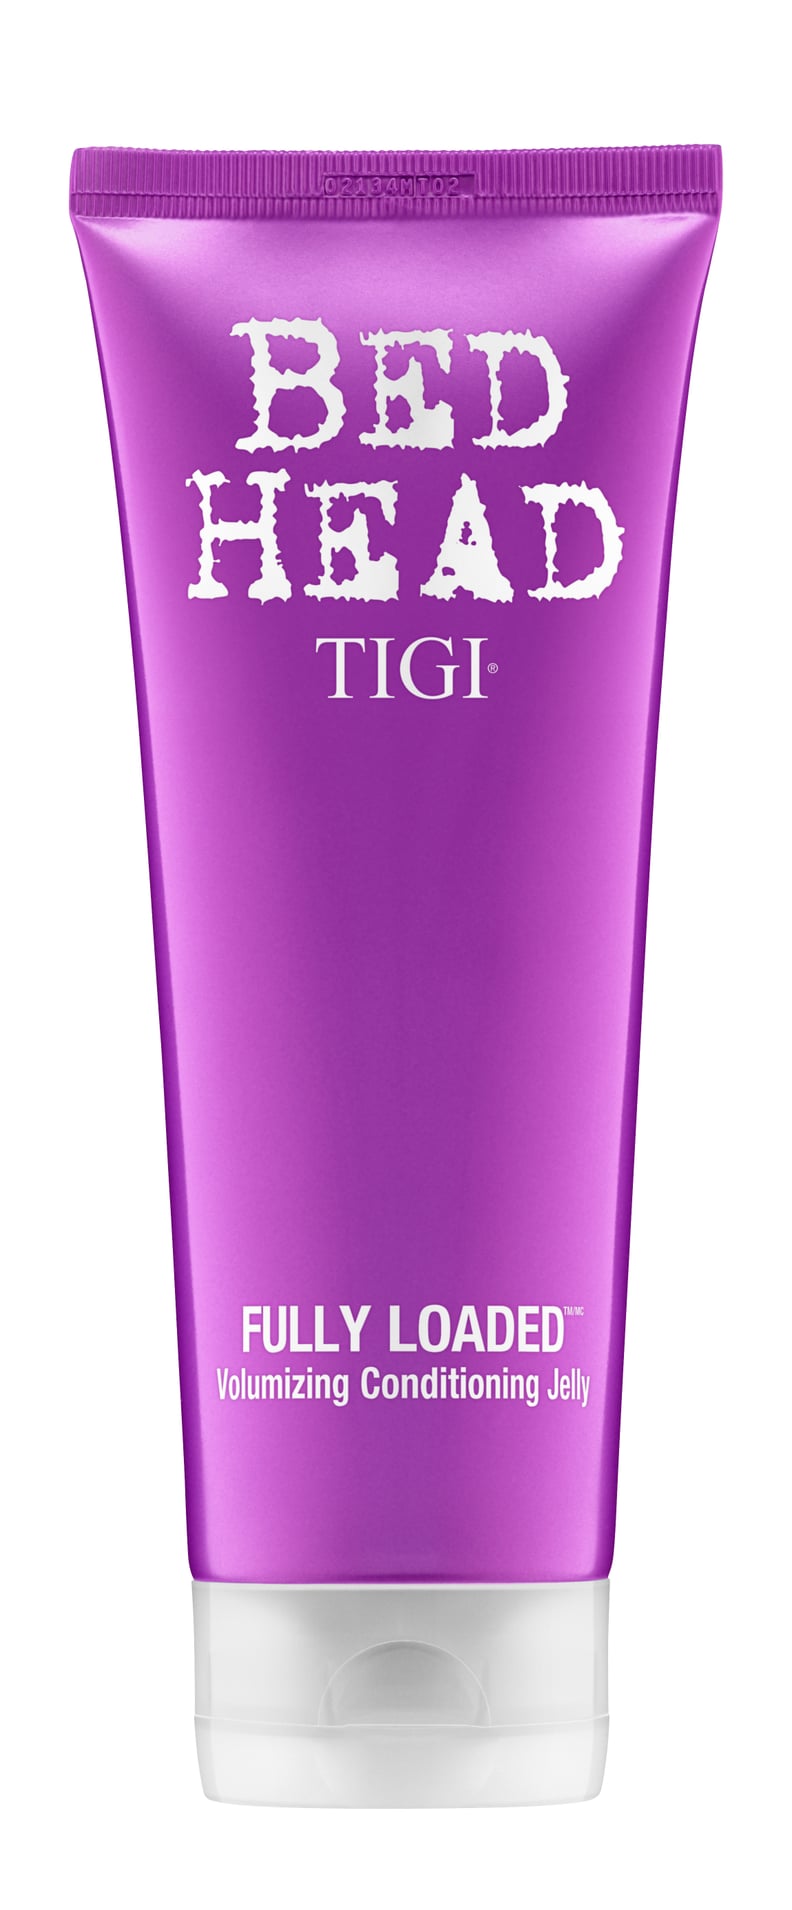 Bed Head by TIGI Fully Loaded Volumizing Conditioning Jelly